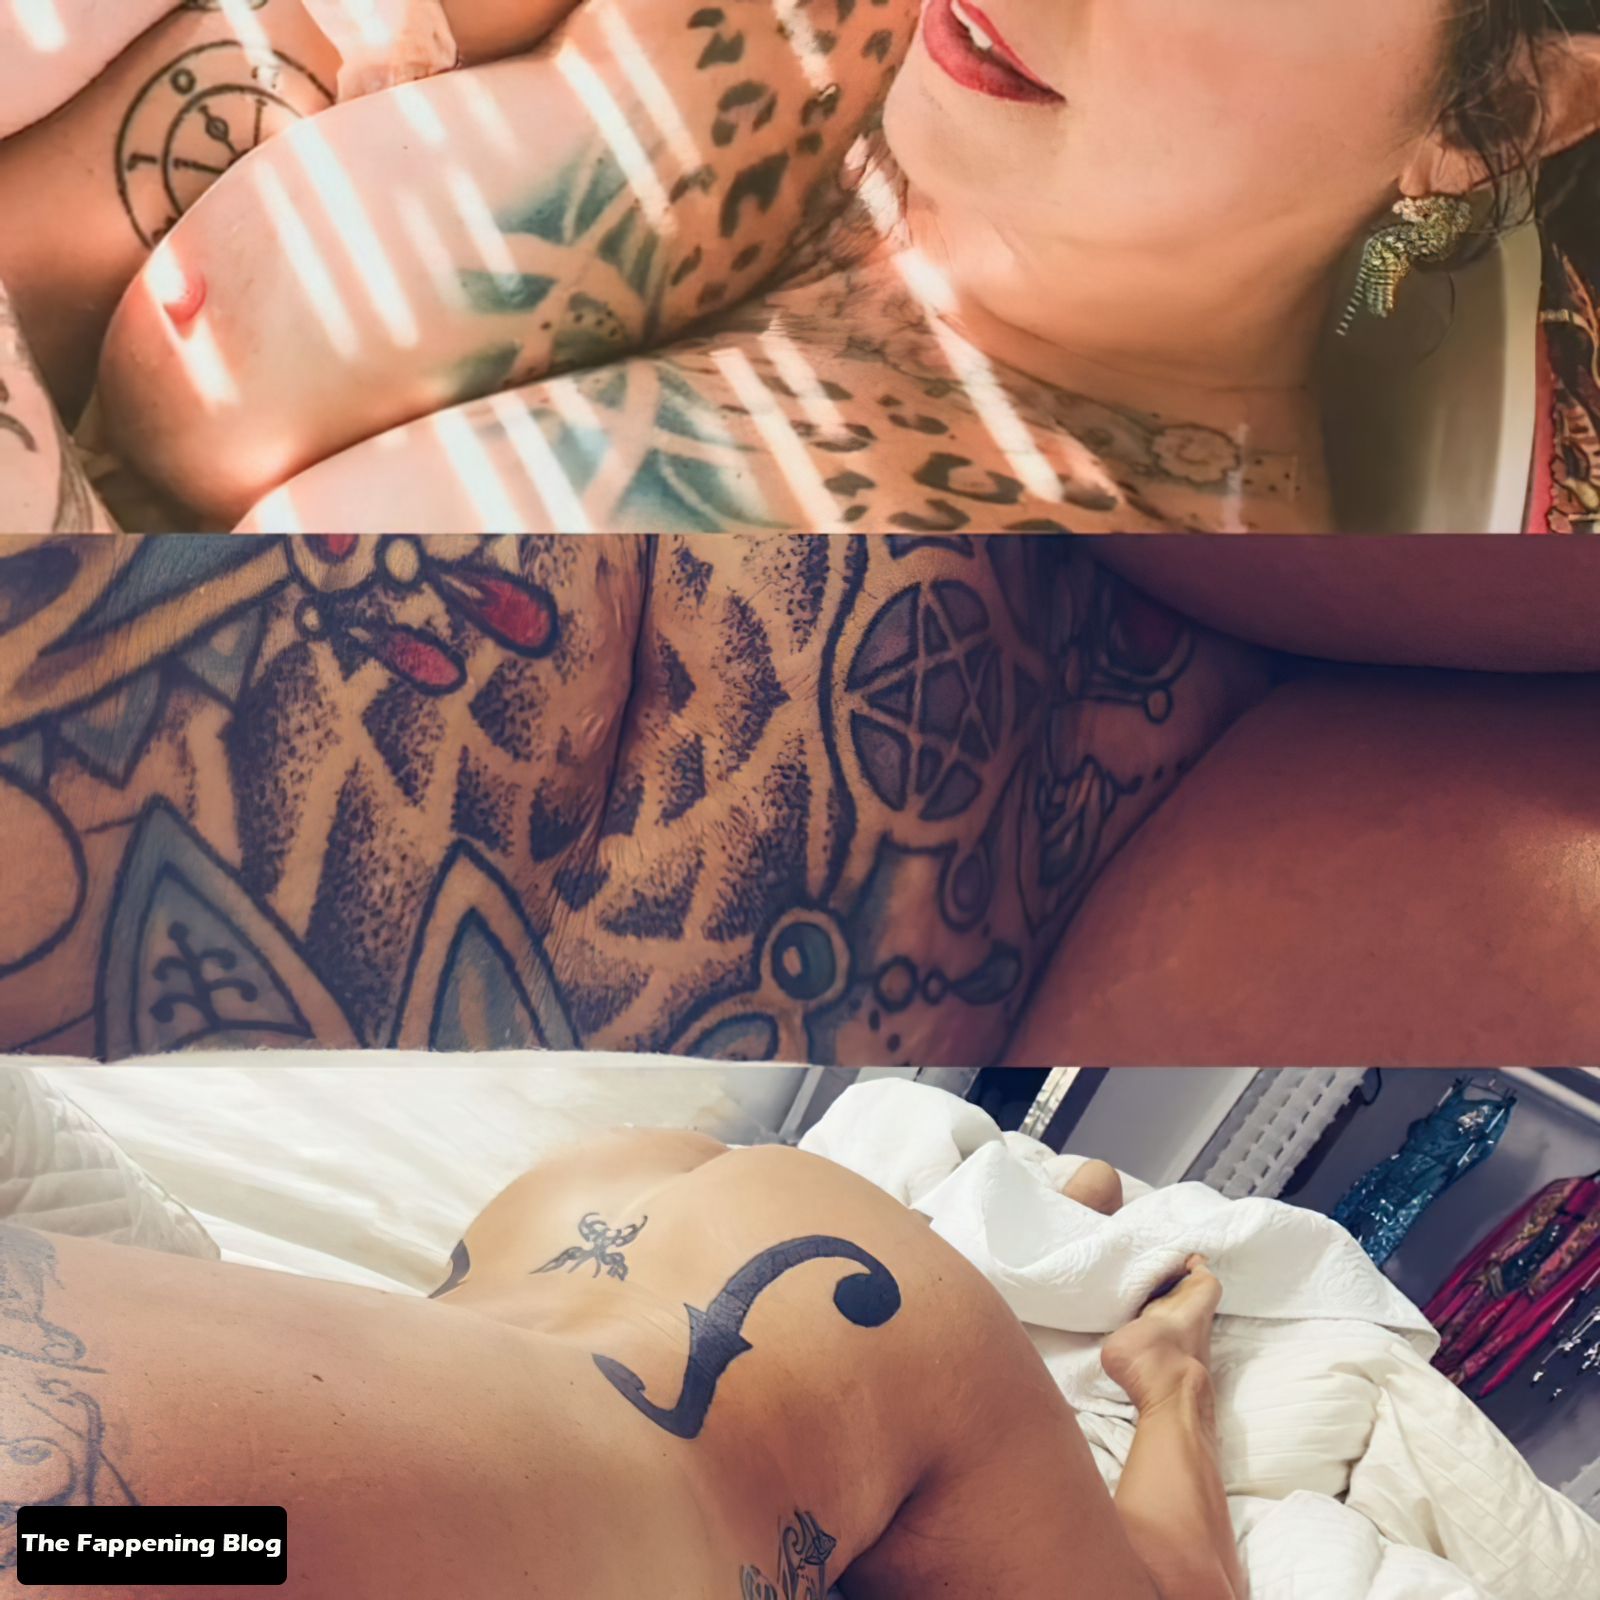 Danielle colby-cushman topless